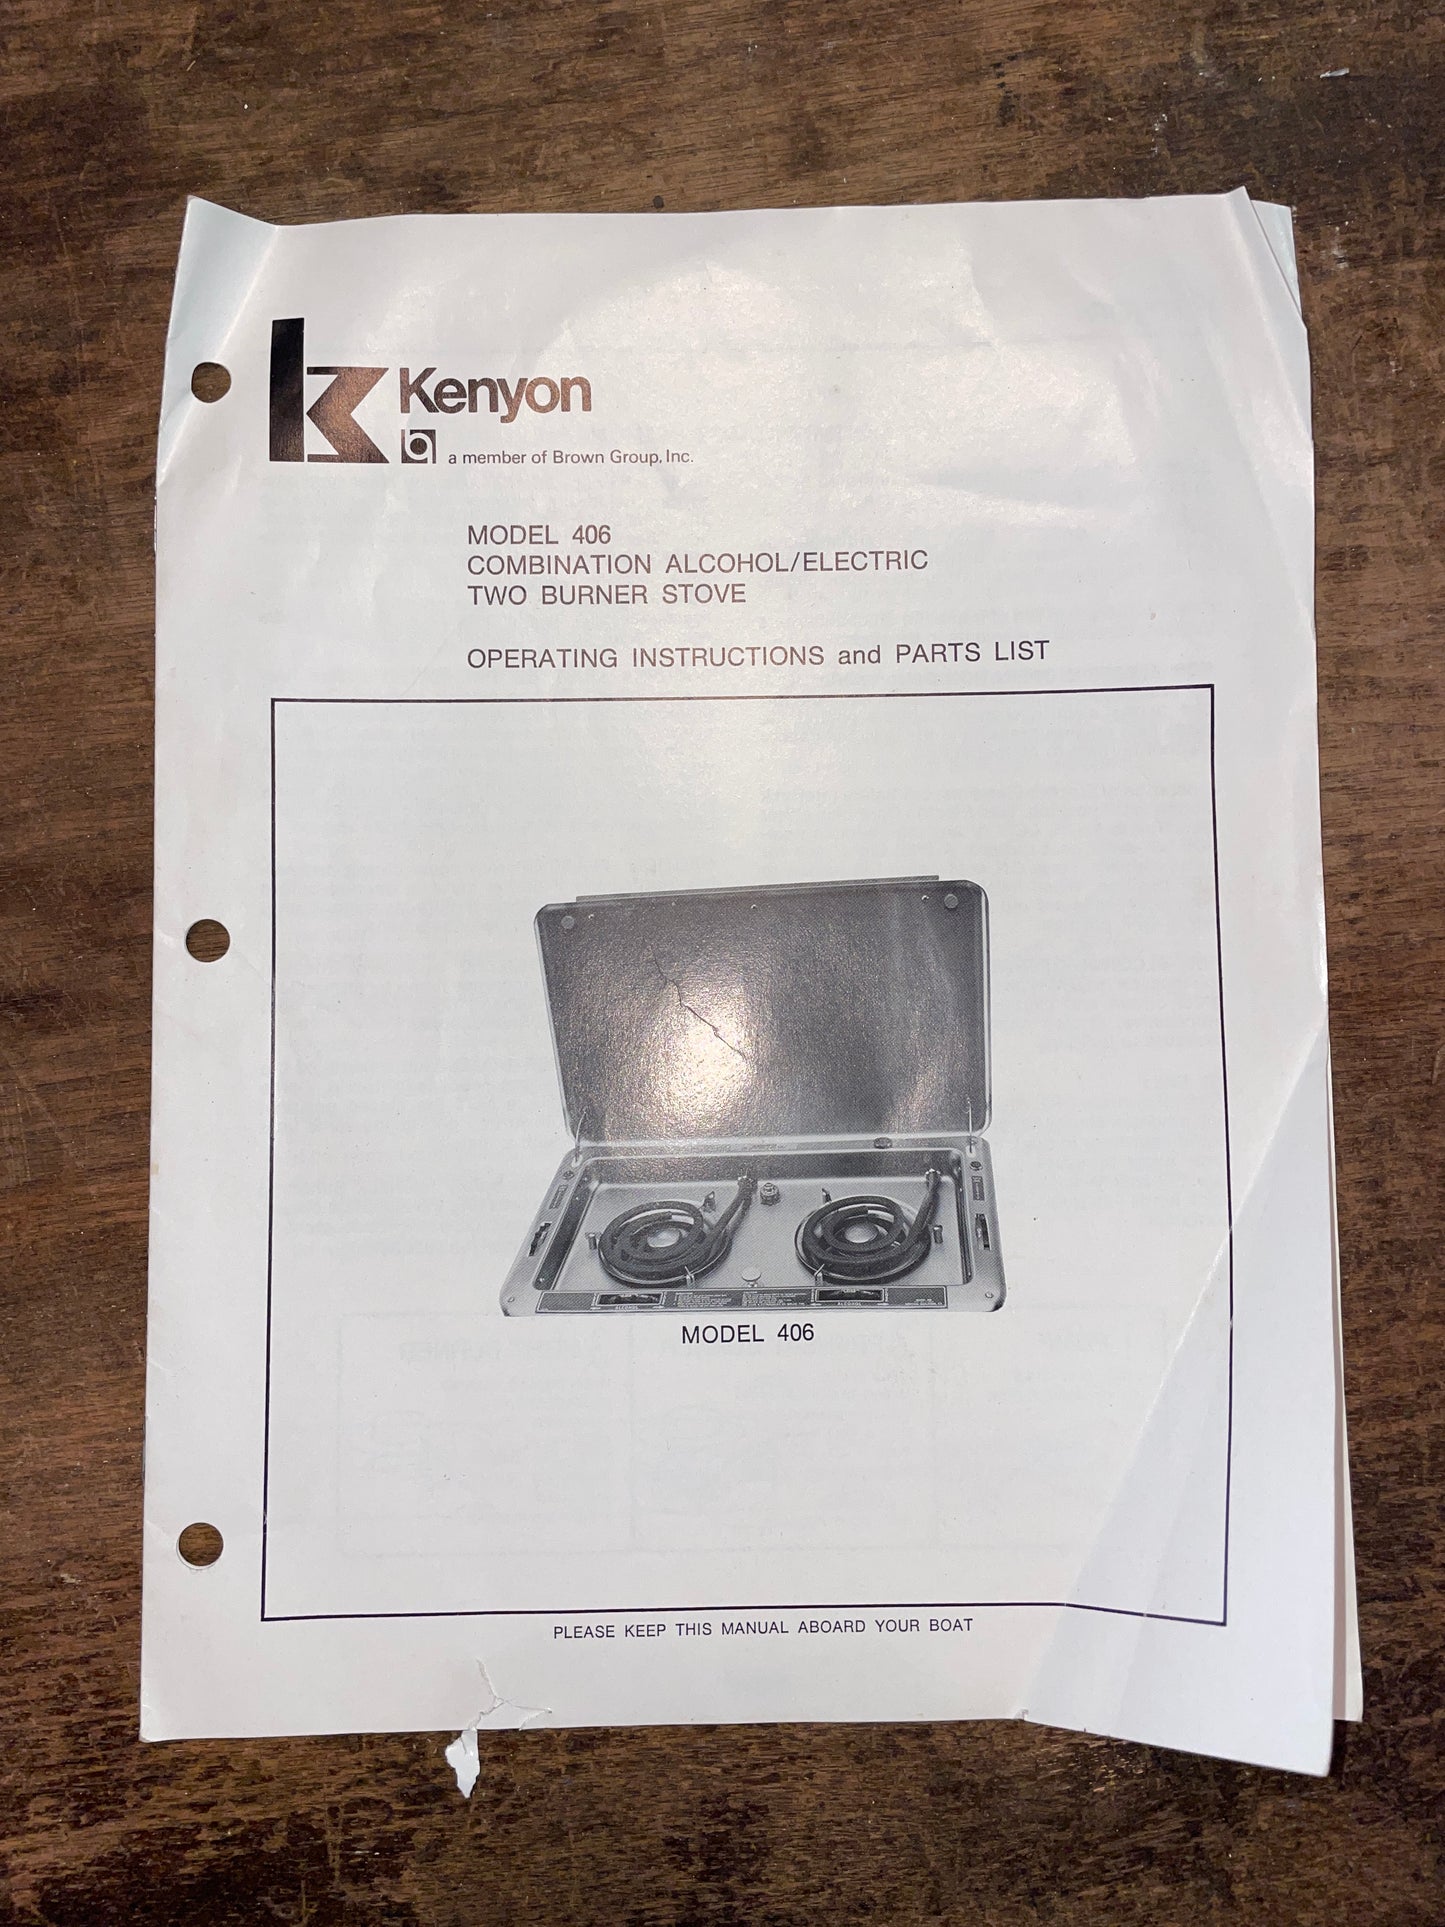 Kenyon 2 Burner Combination Alcohol/Electric Stove Model 406